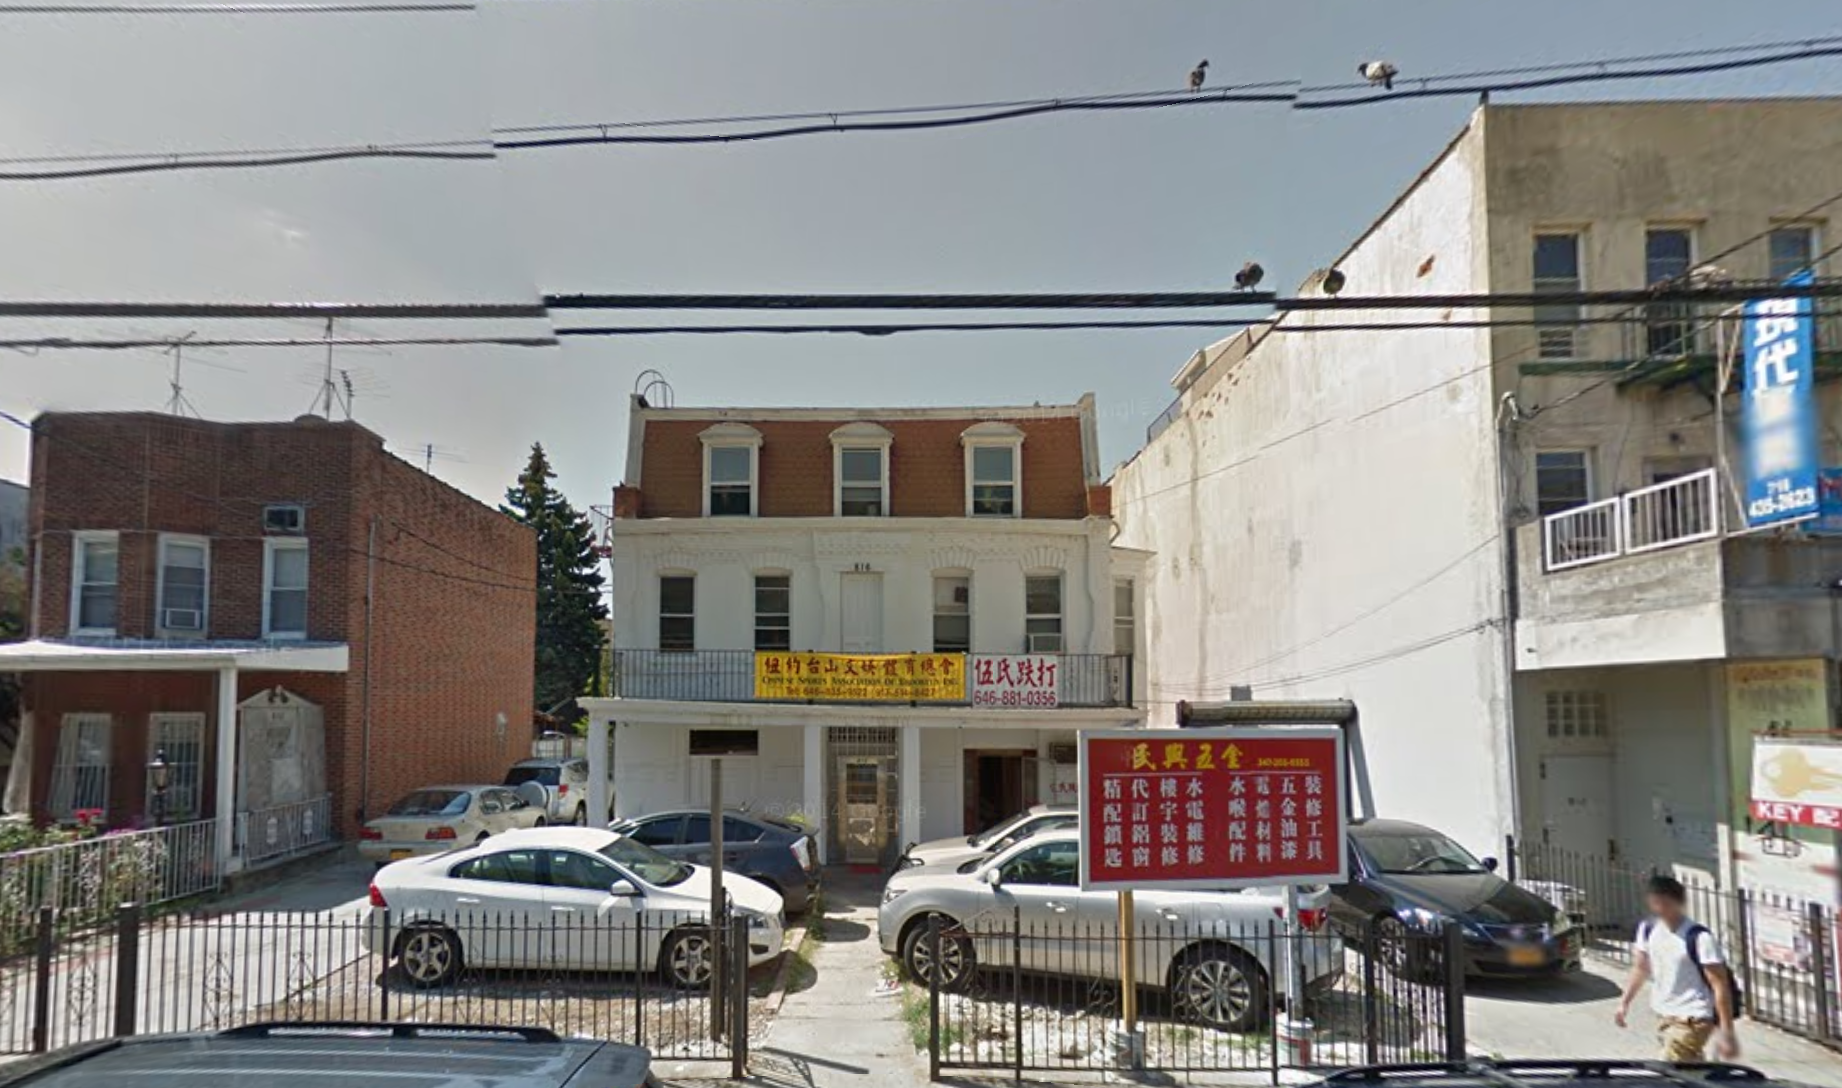 816 58th Street, image via Google Maps